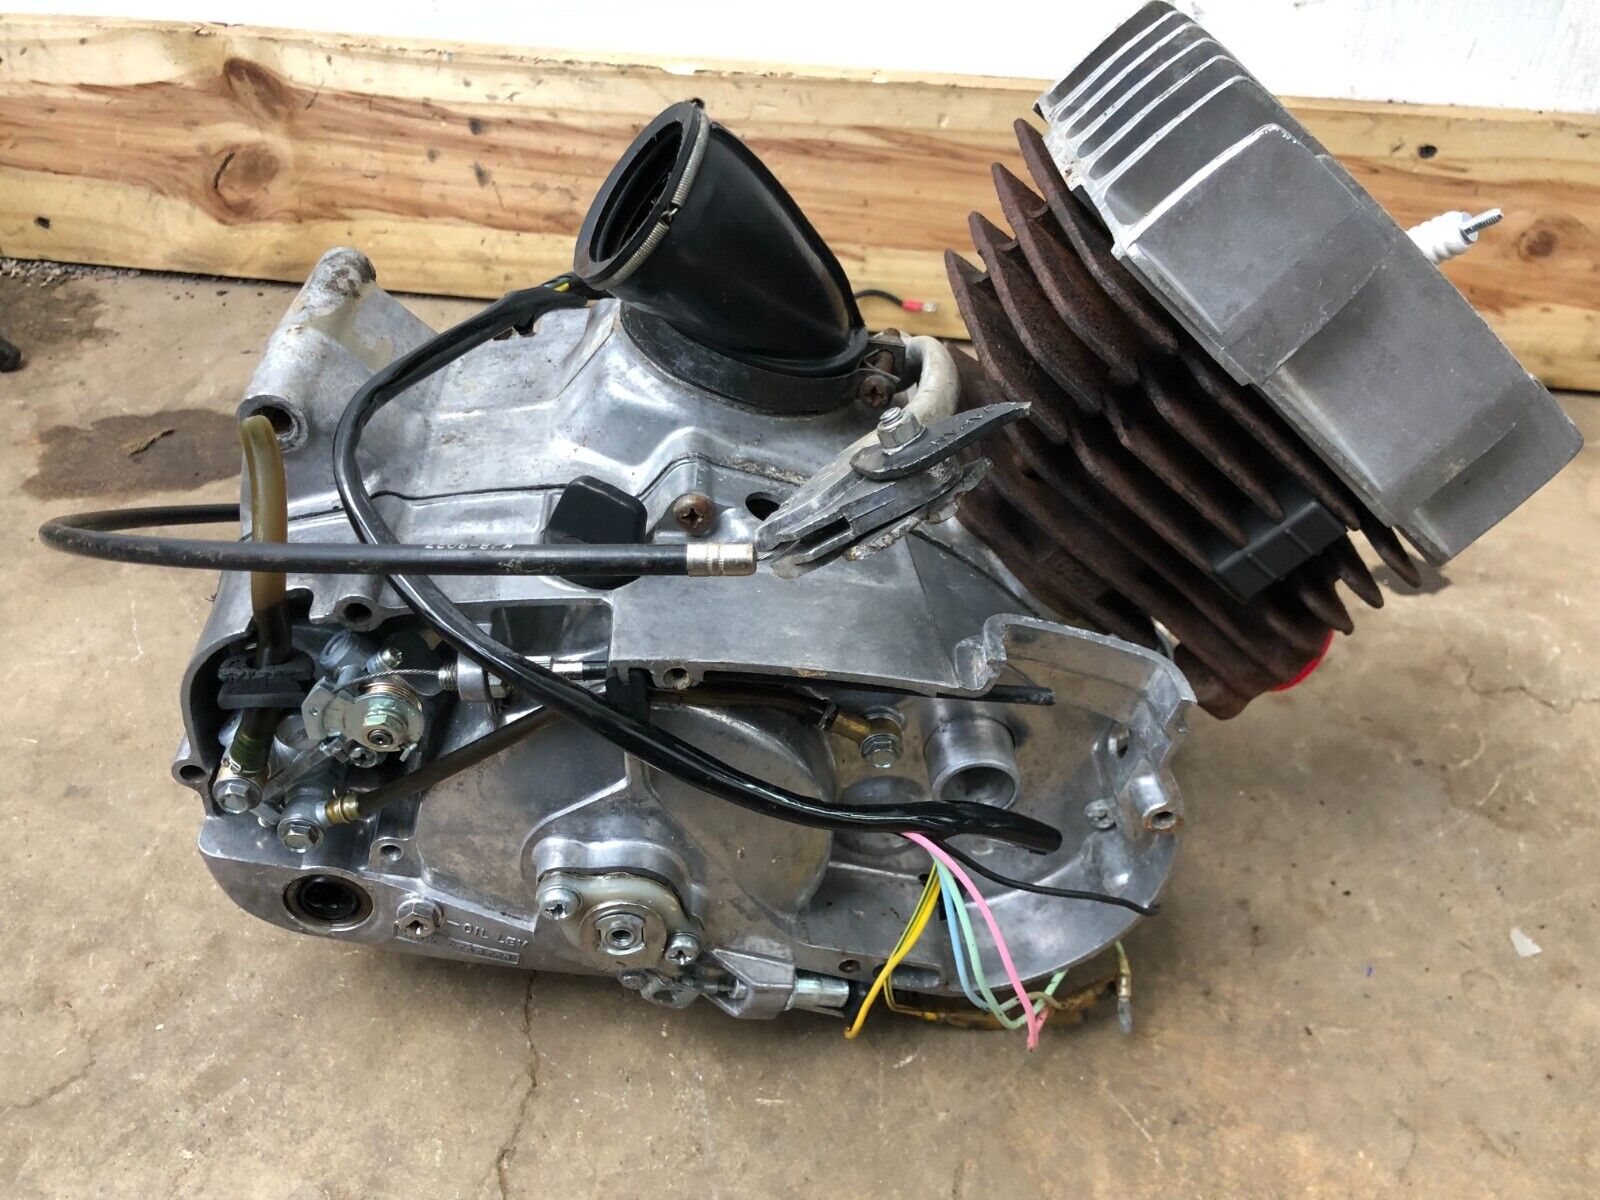 1975 Kawasaki MC1 90 Engine (For parts)